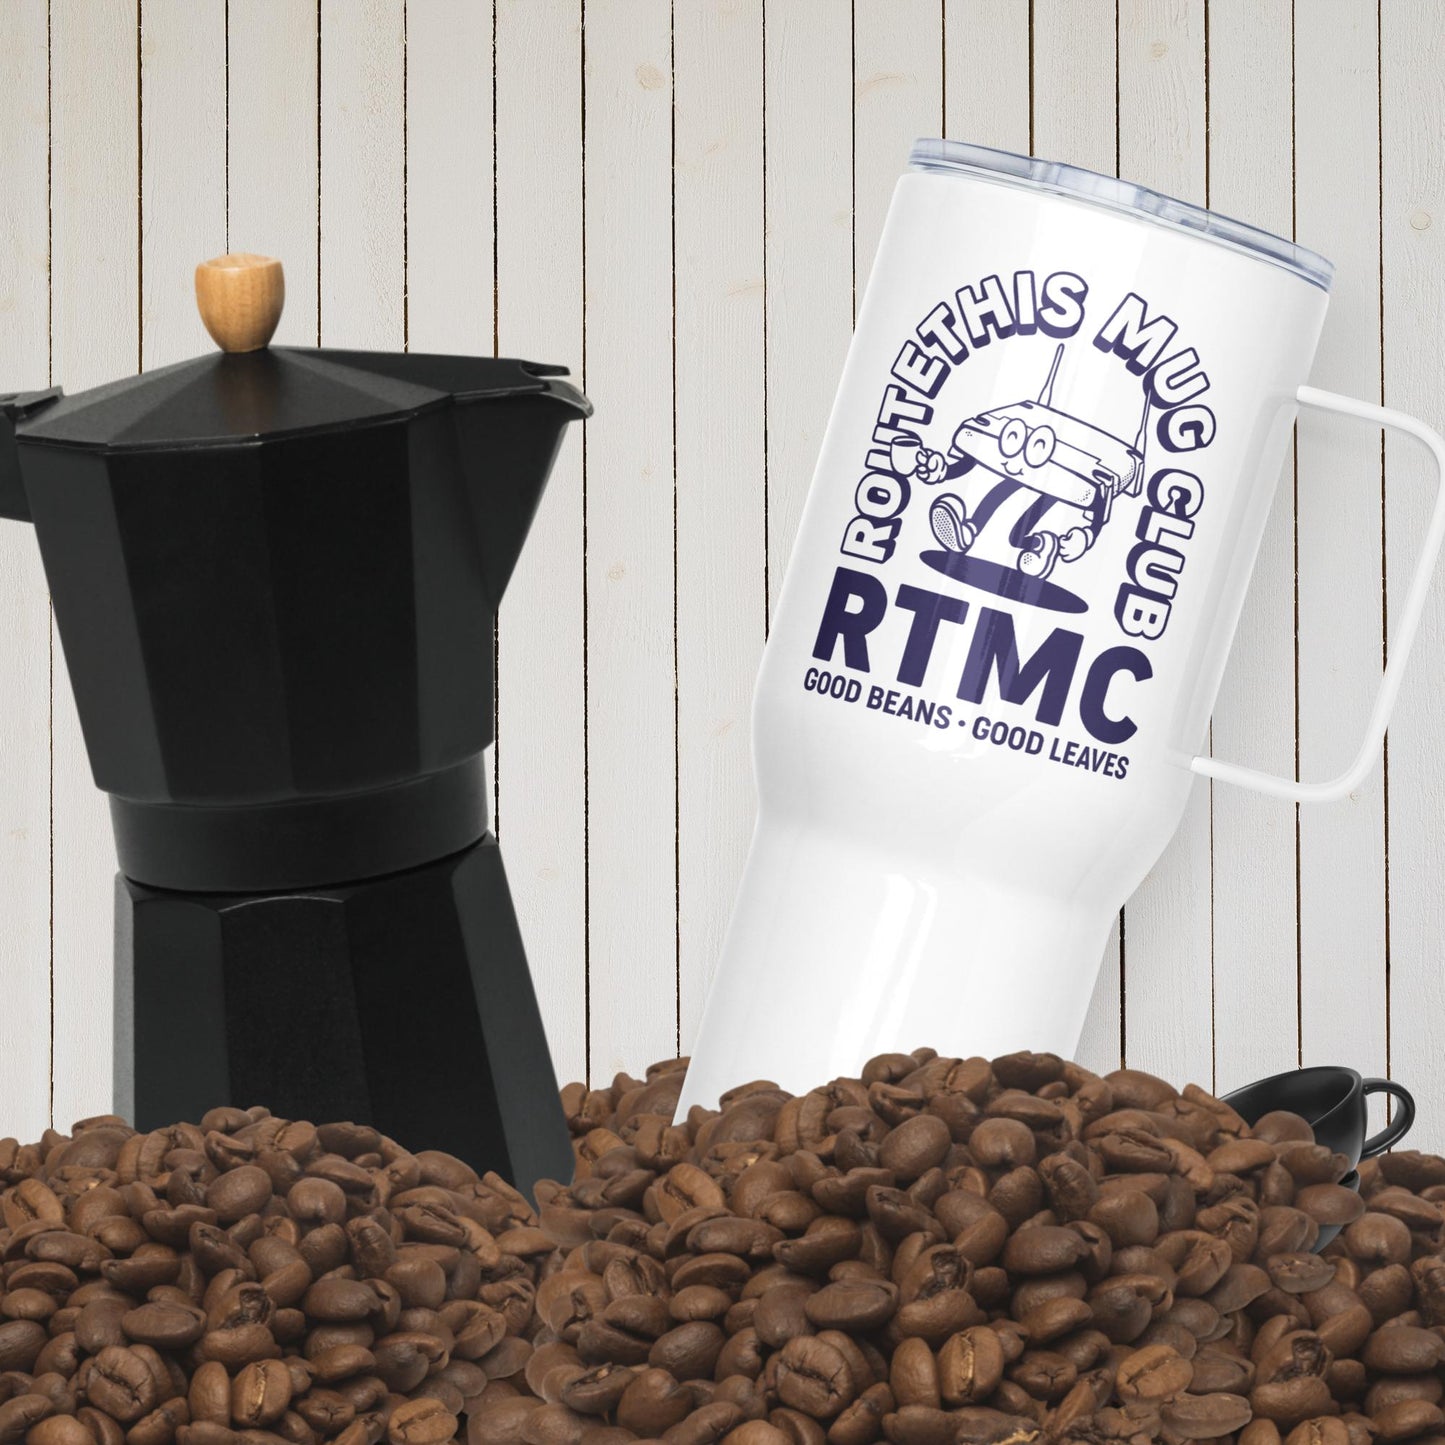 RouteThis Mug Club - Travel mug with a handle